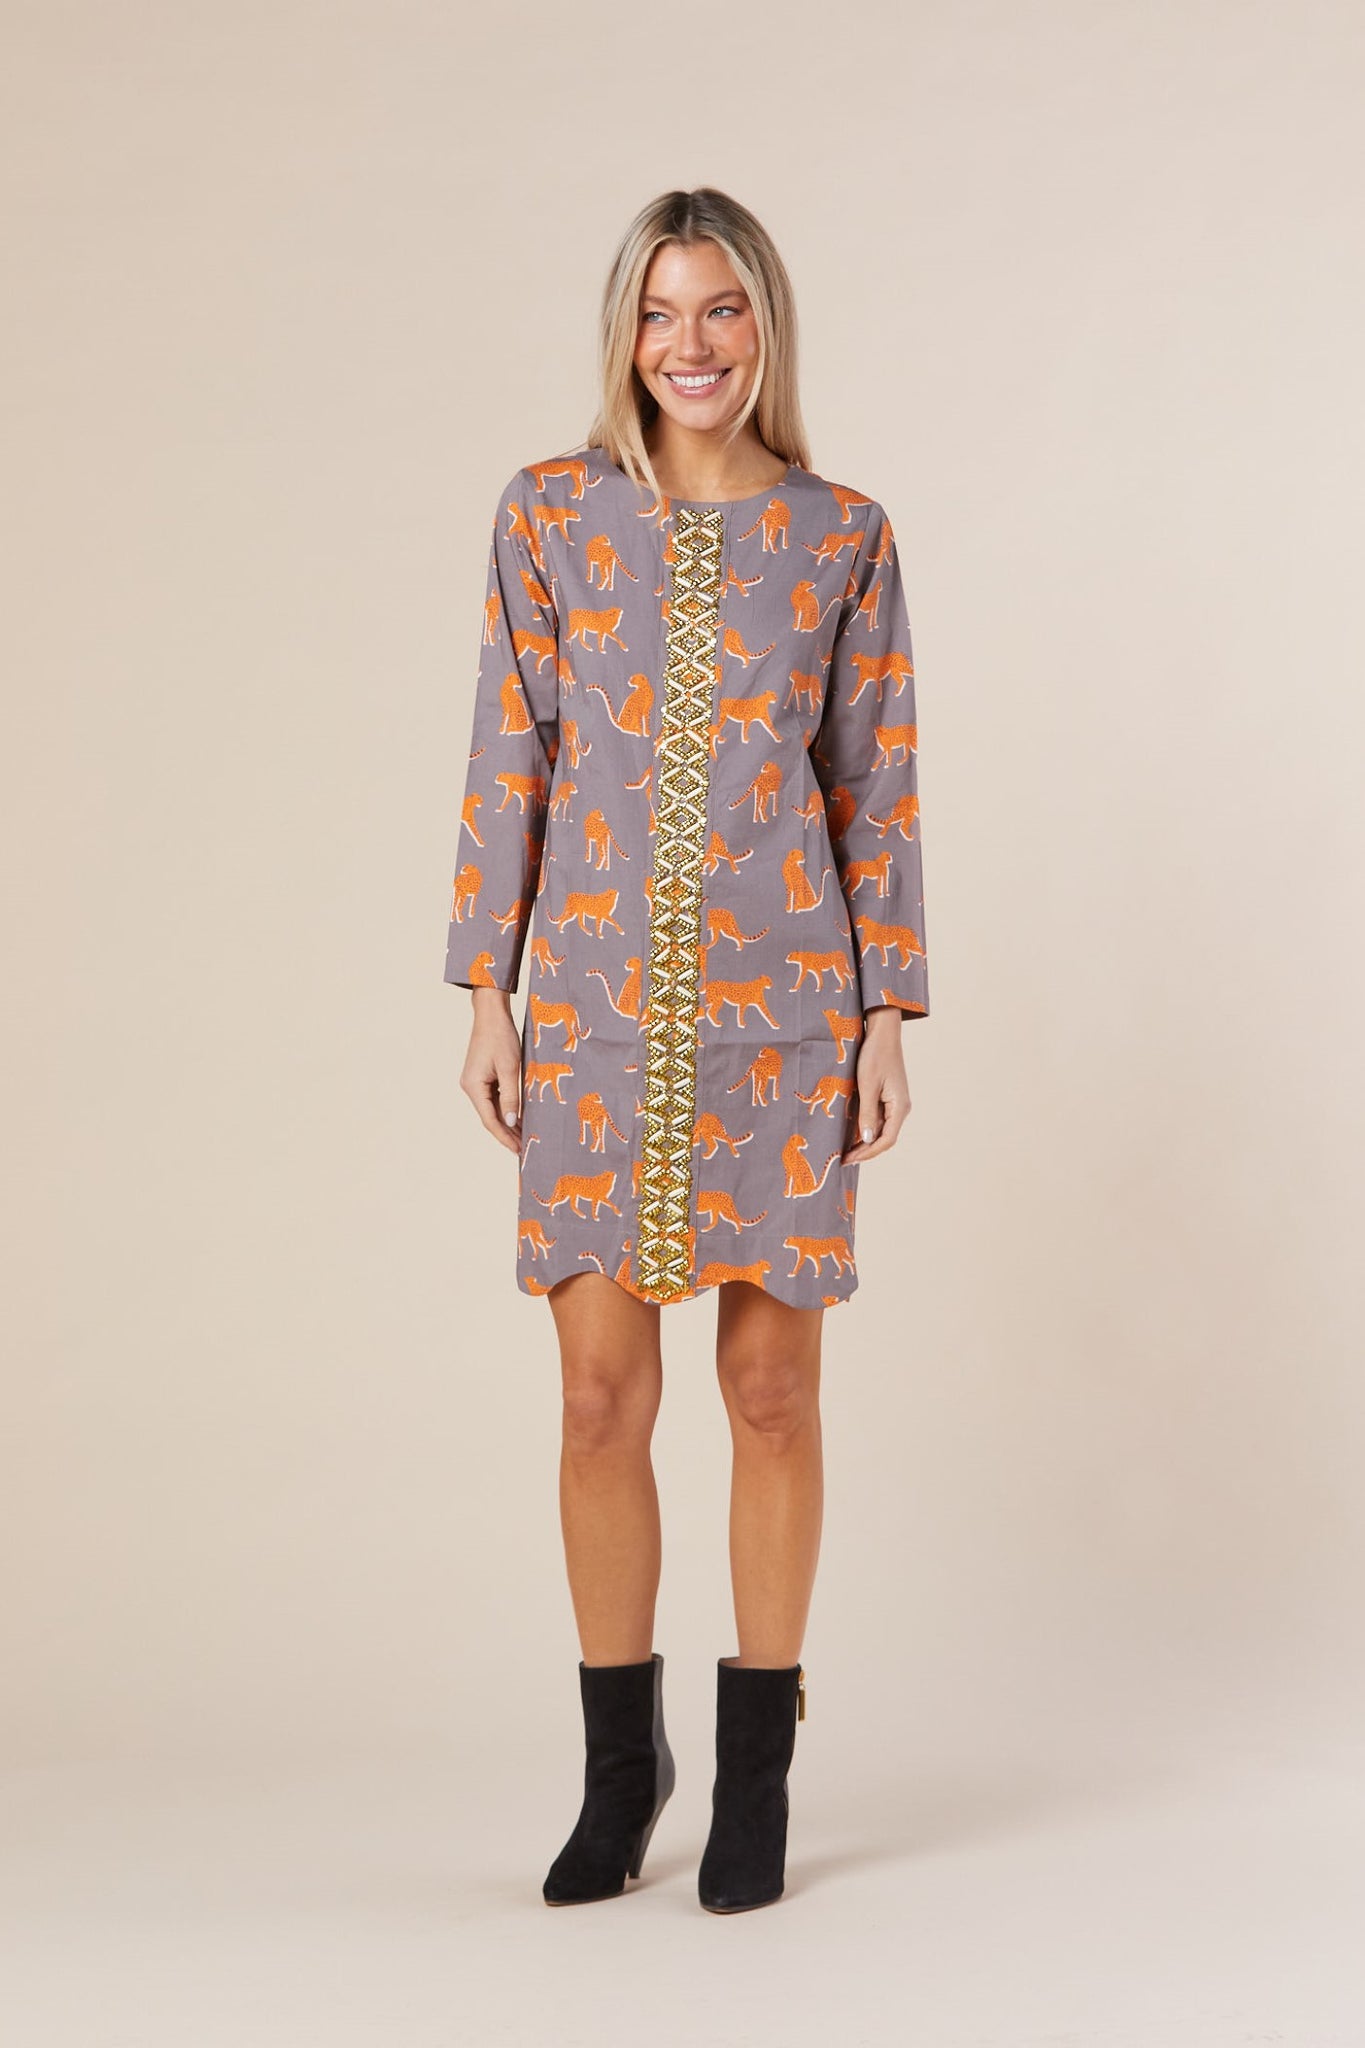 Blair Dress in Mushroom Cheetah